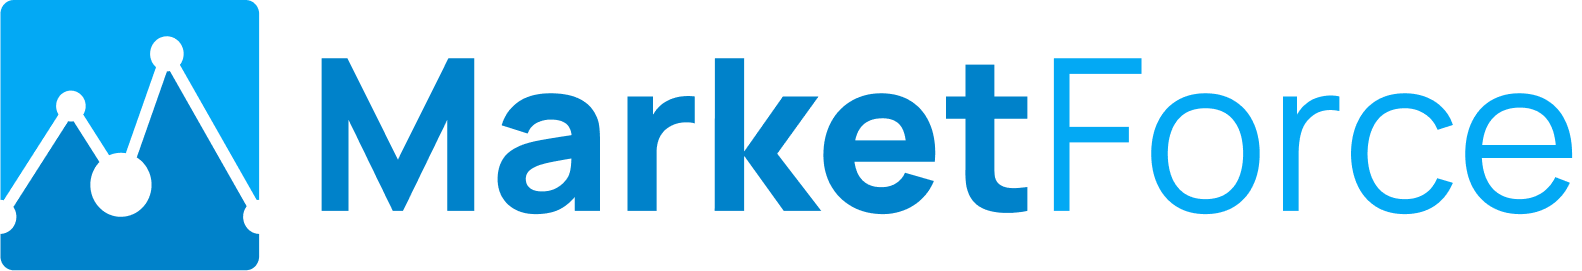 MarketForce-Logo-High-Res